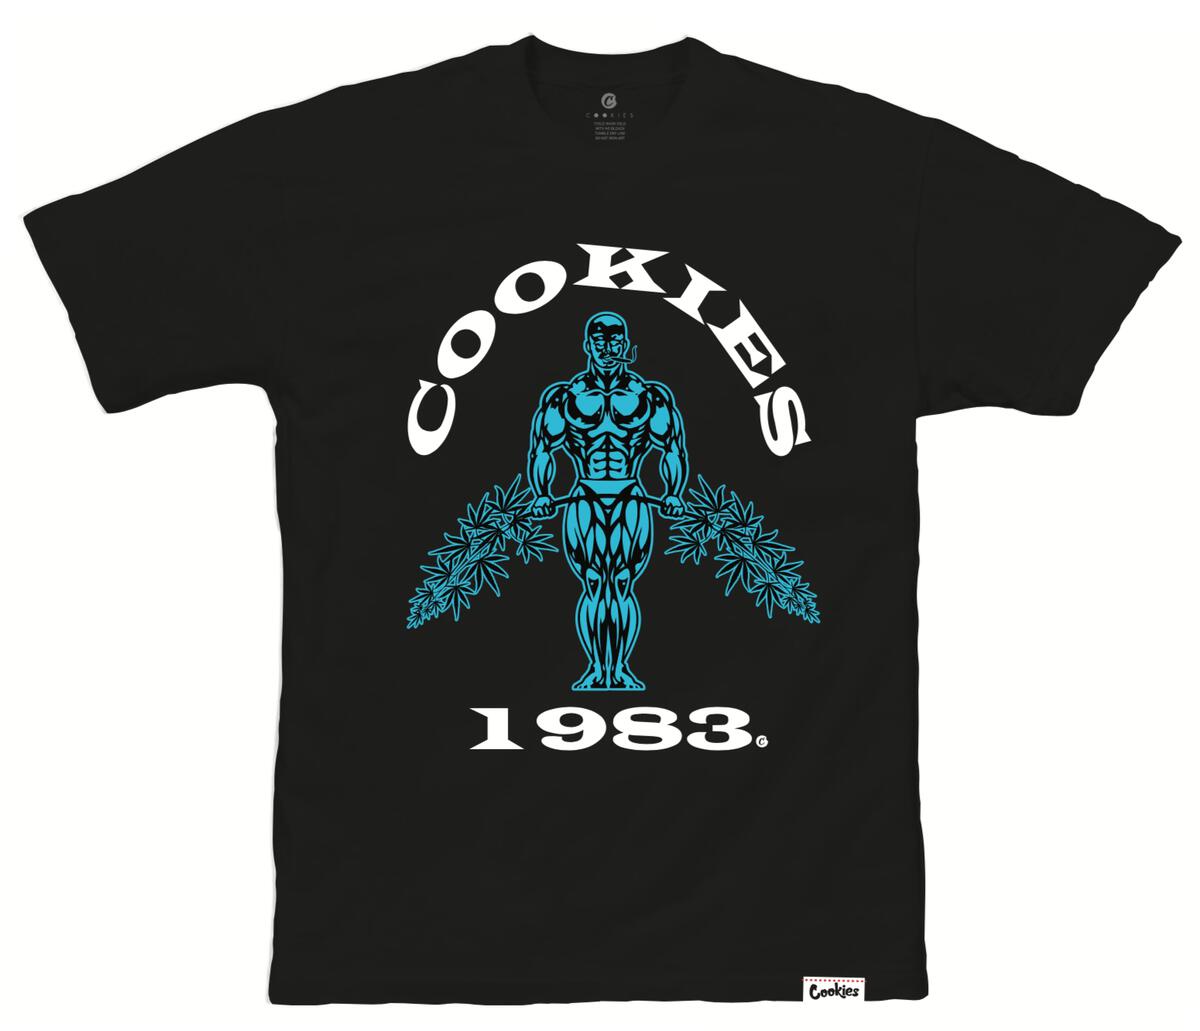 Cookies - Kush-Ups Tee - Black - 1560T6415